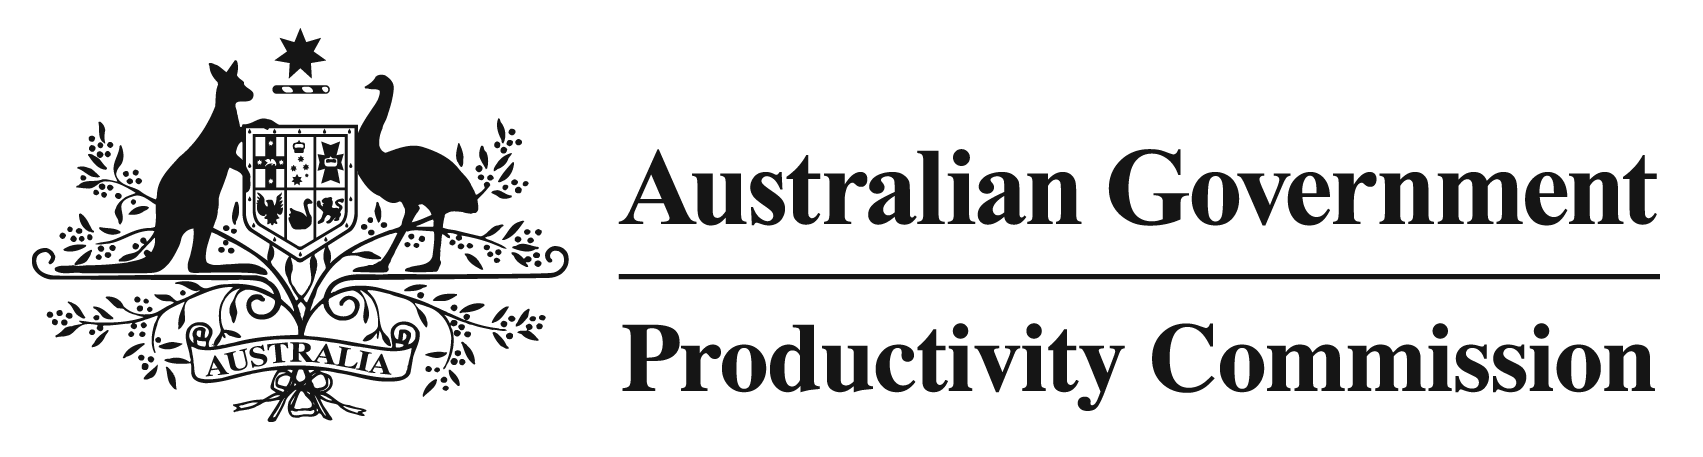 Productivity Commission logo